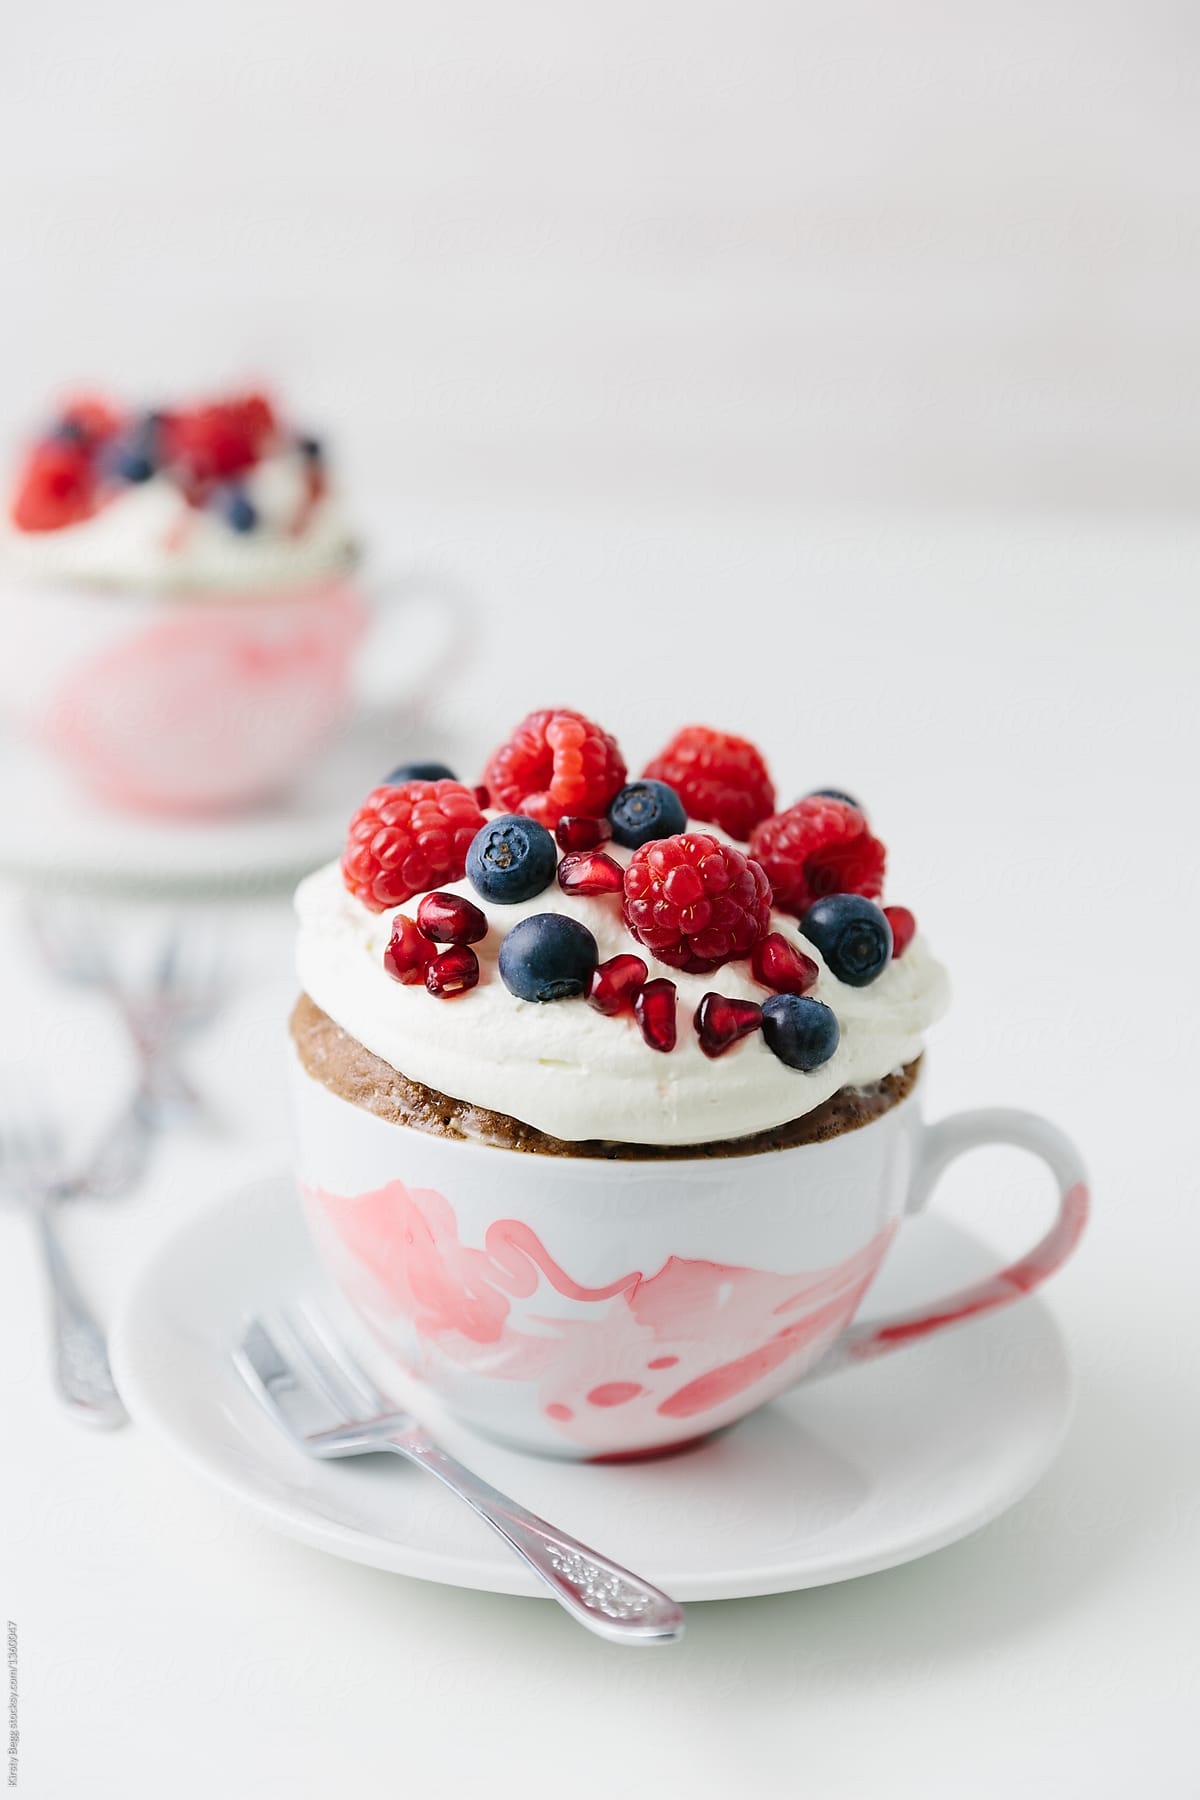 Mug cake microwave dessert with cream and berries on top